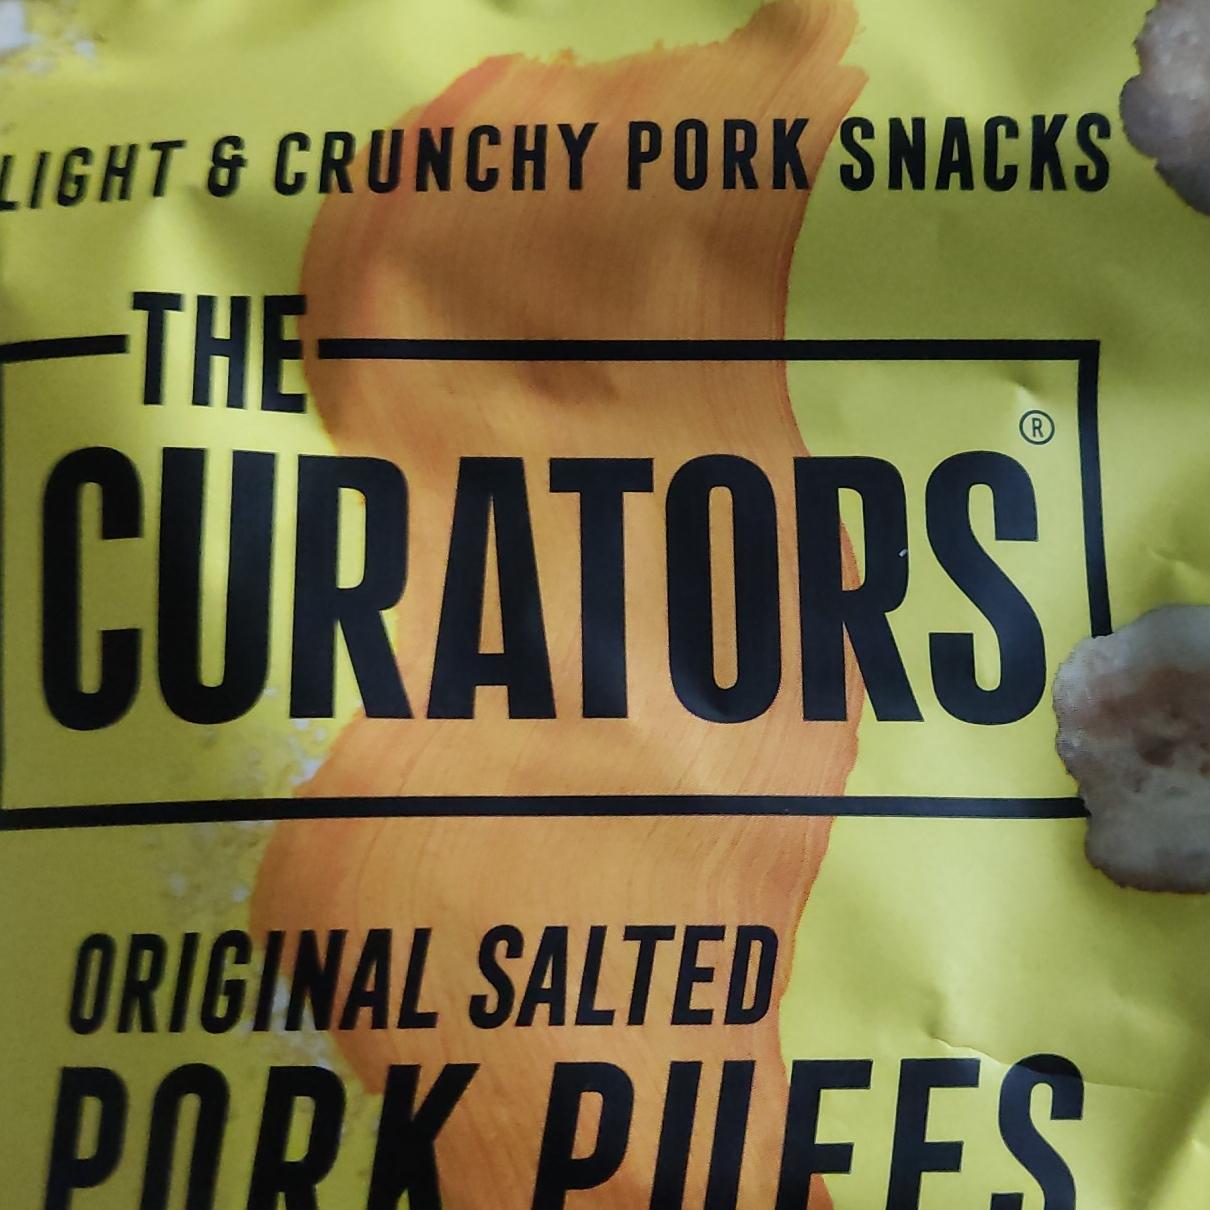 Fotografie - original salted pork puffs The Curators